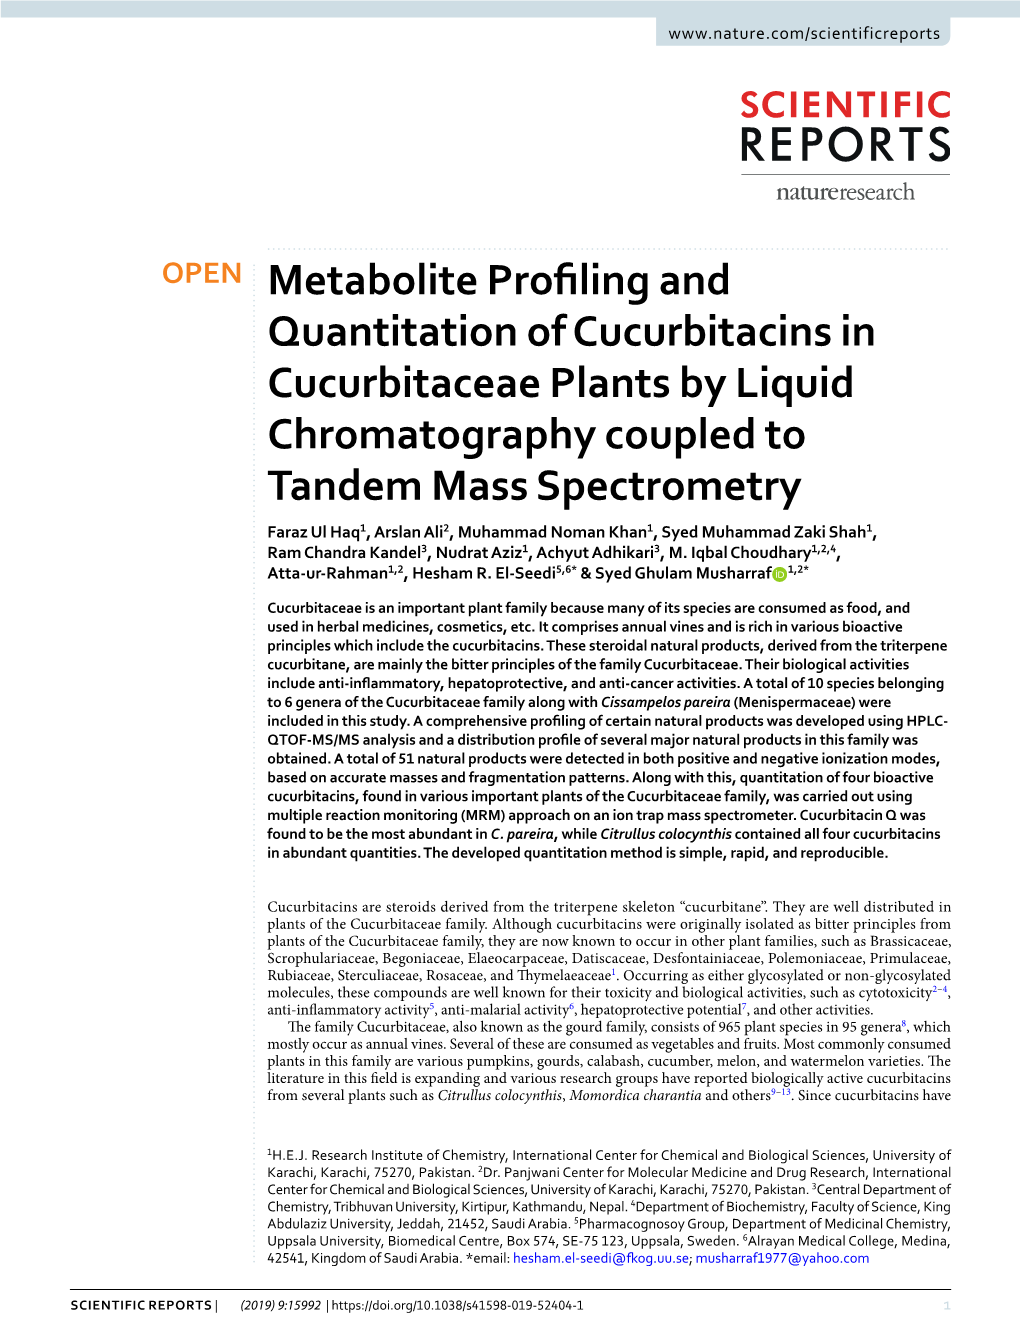 Metabolite Profiling and Quantitation of Cucurbitacins in Cucurbitaceae Plants by Liquid Chromatography Coupled to Tandem Mass S